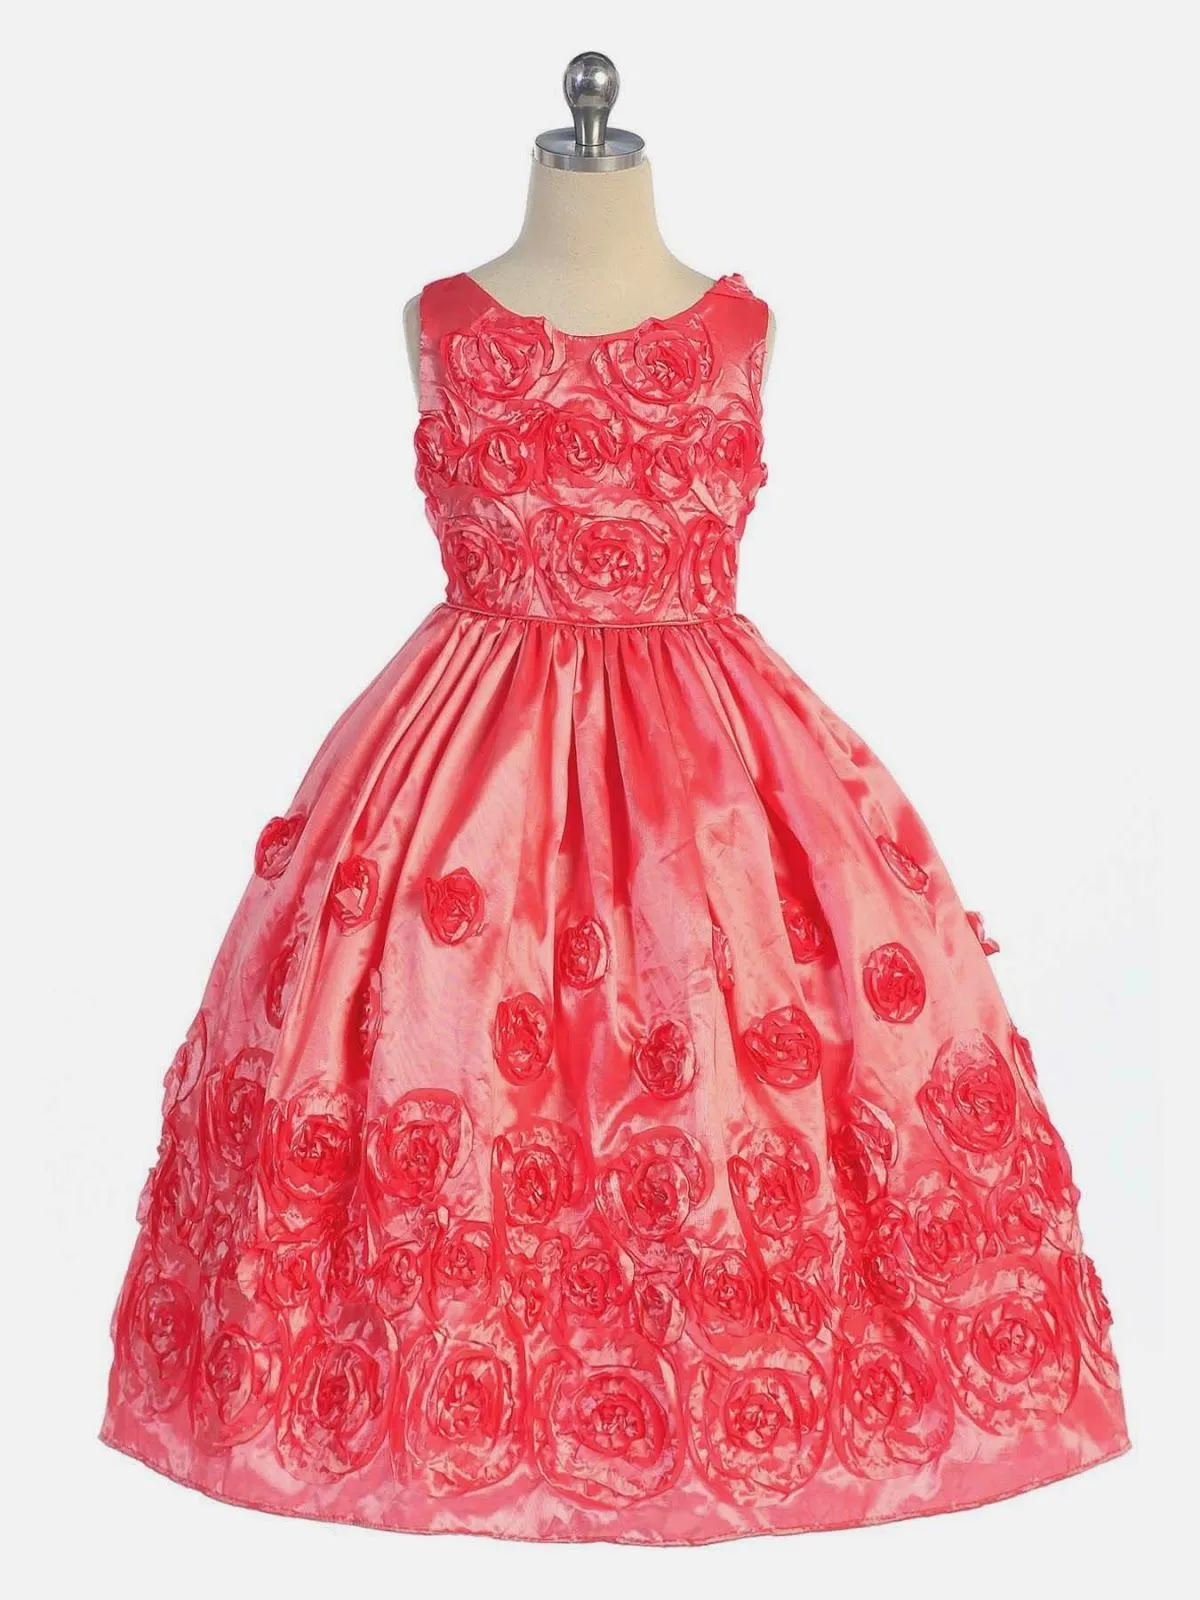 Vestidos Niña de las Flores, Color Coral | Bodas | Pinterest ...